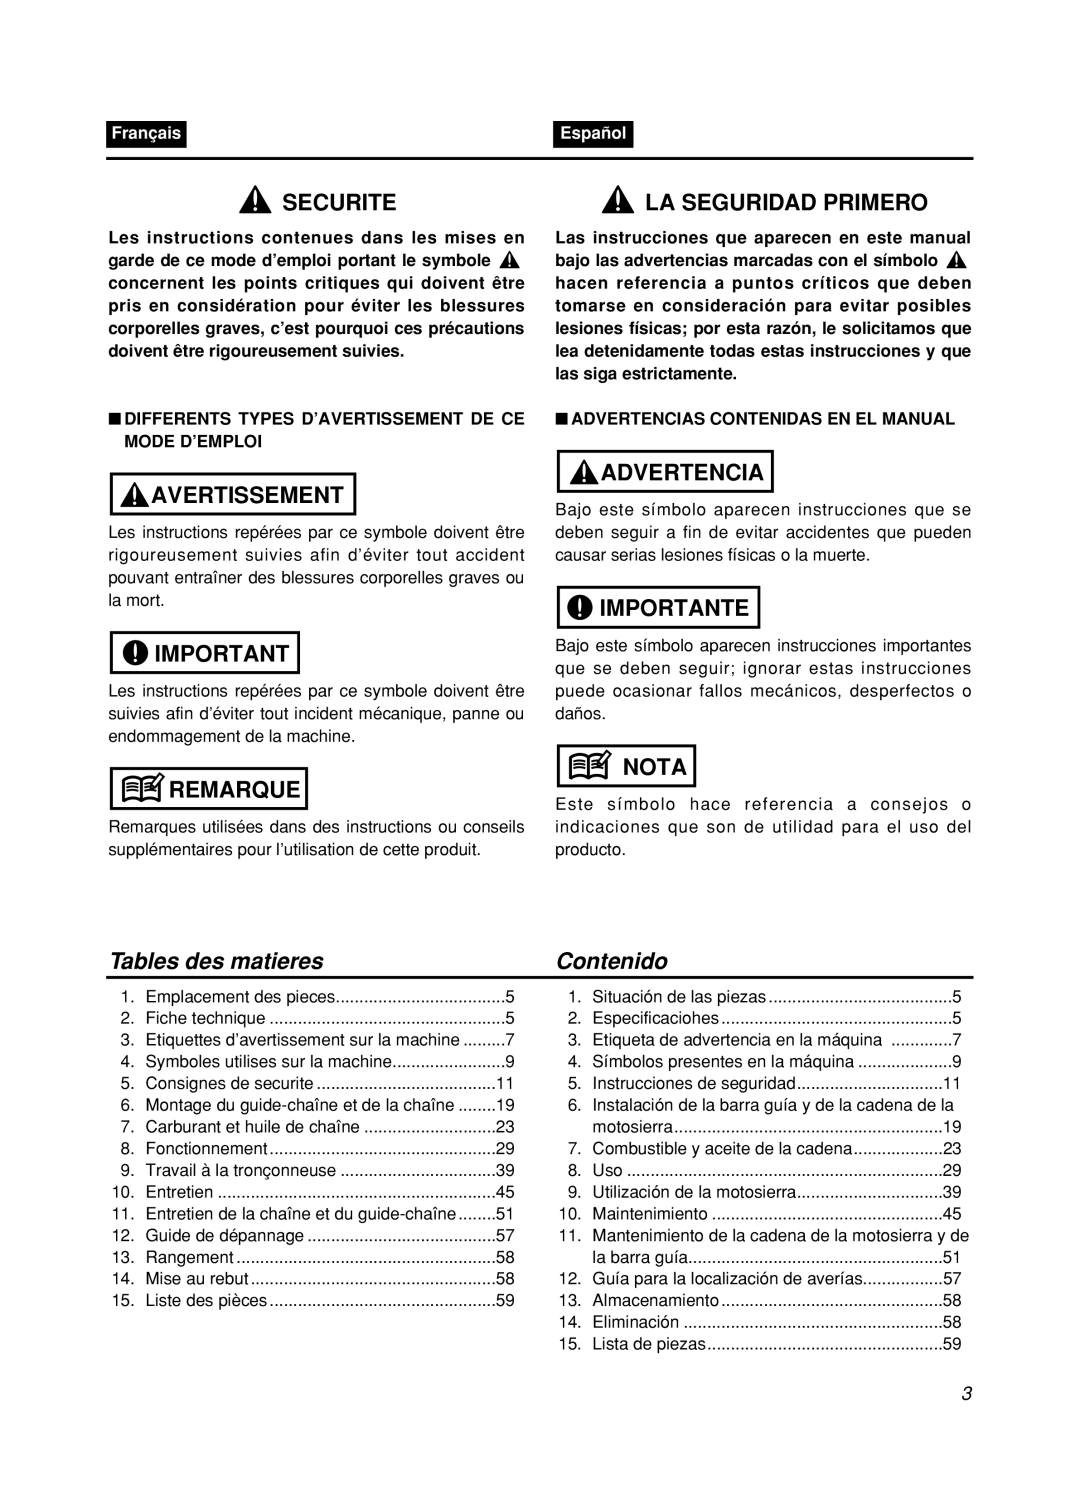 Zenoah GZ400 manual Securite, Avertissement, Remarque, Advertencia, Importante, Nota, Tables des matieres, Contenido 